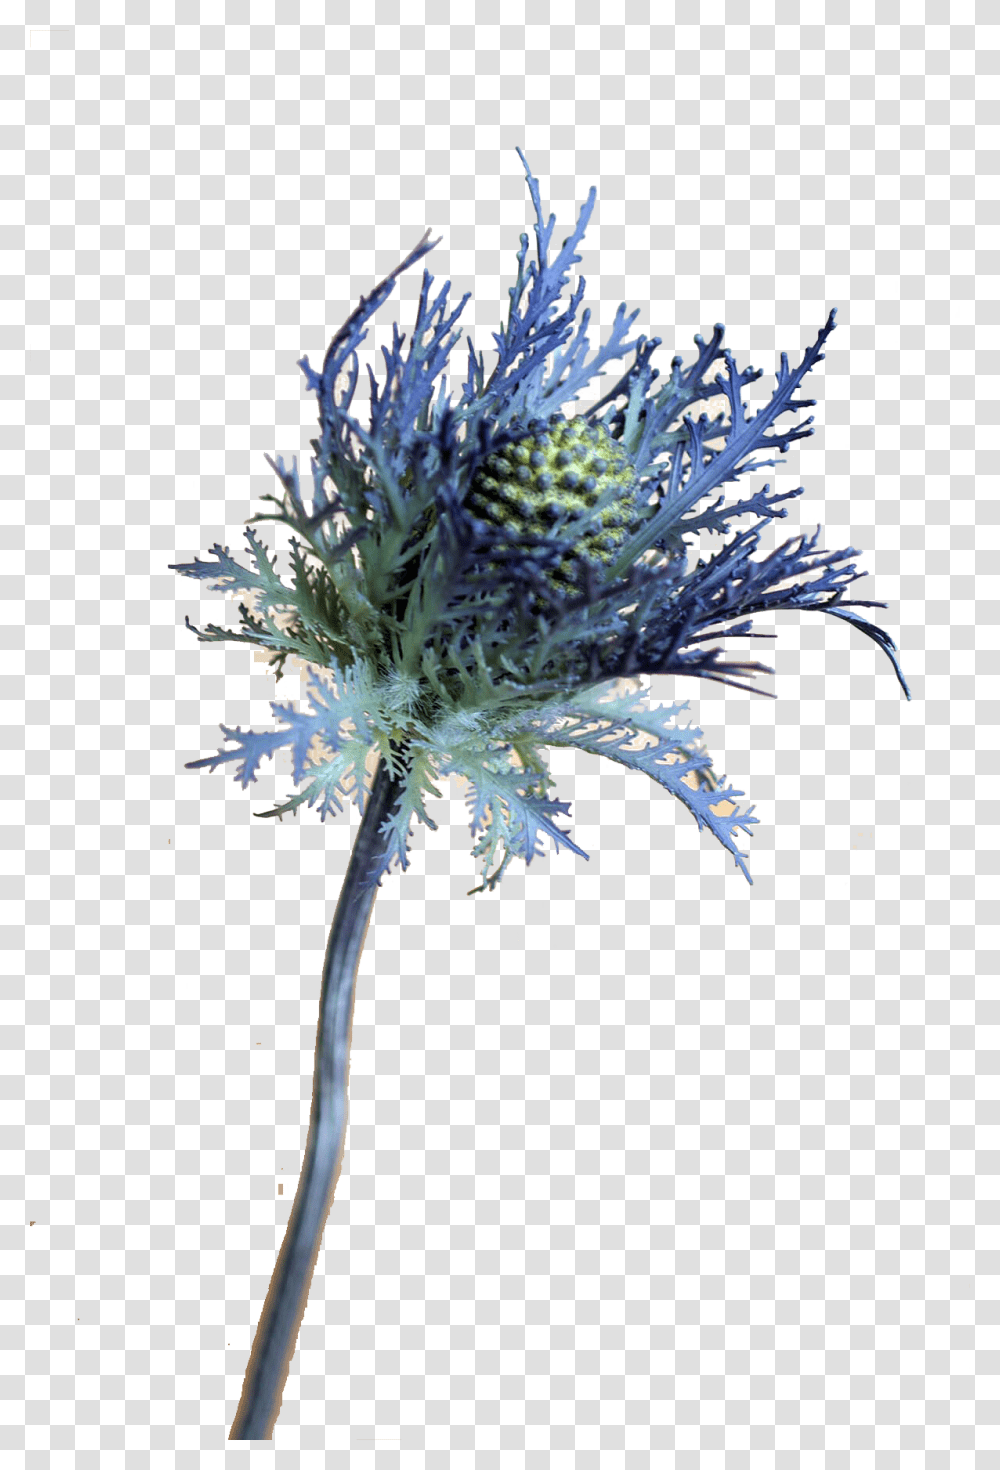 Blue Thistle Flowers Free Download, Plant, Bird, Kale, Cabbage Transparent Png